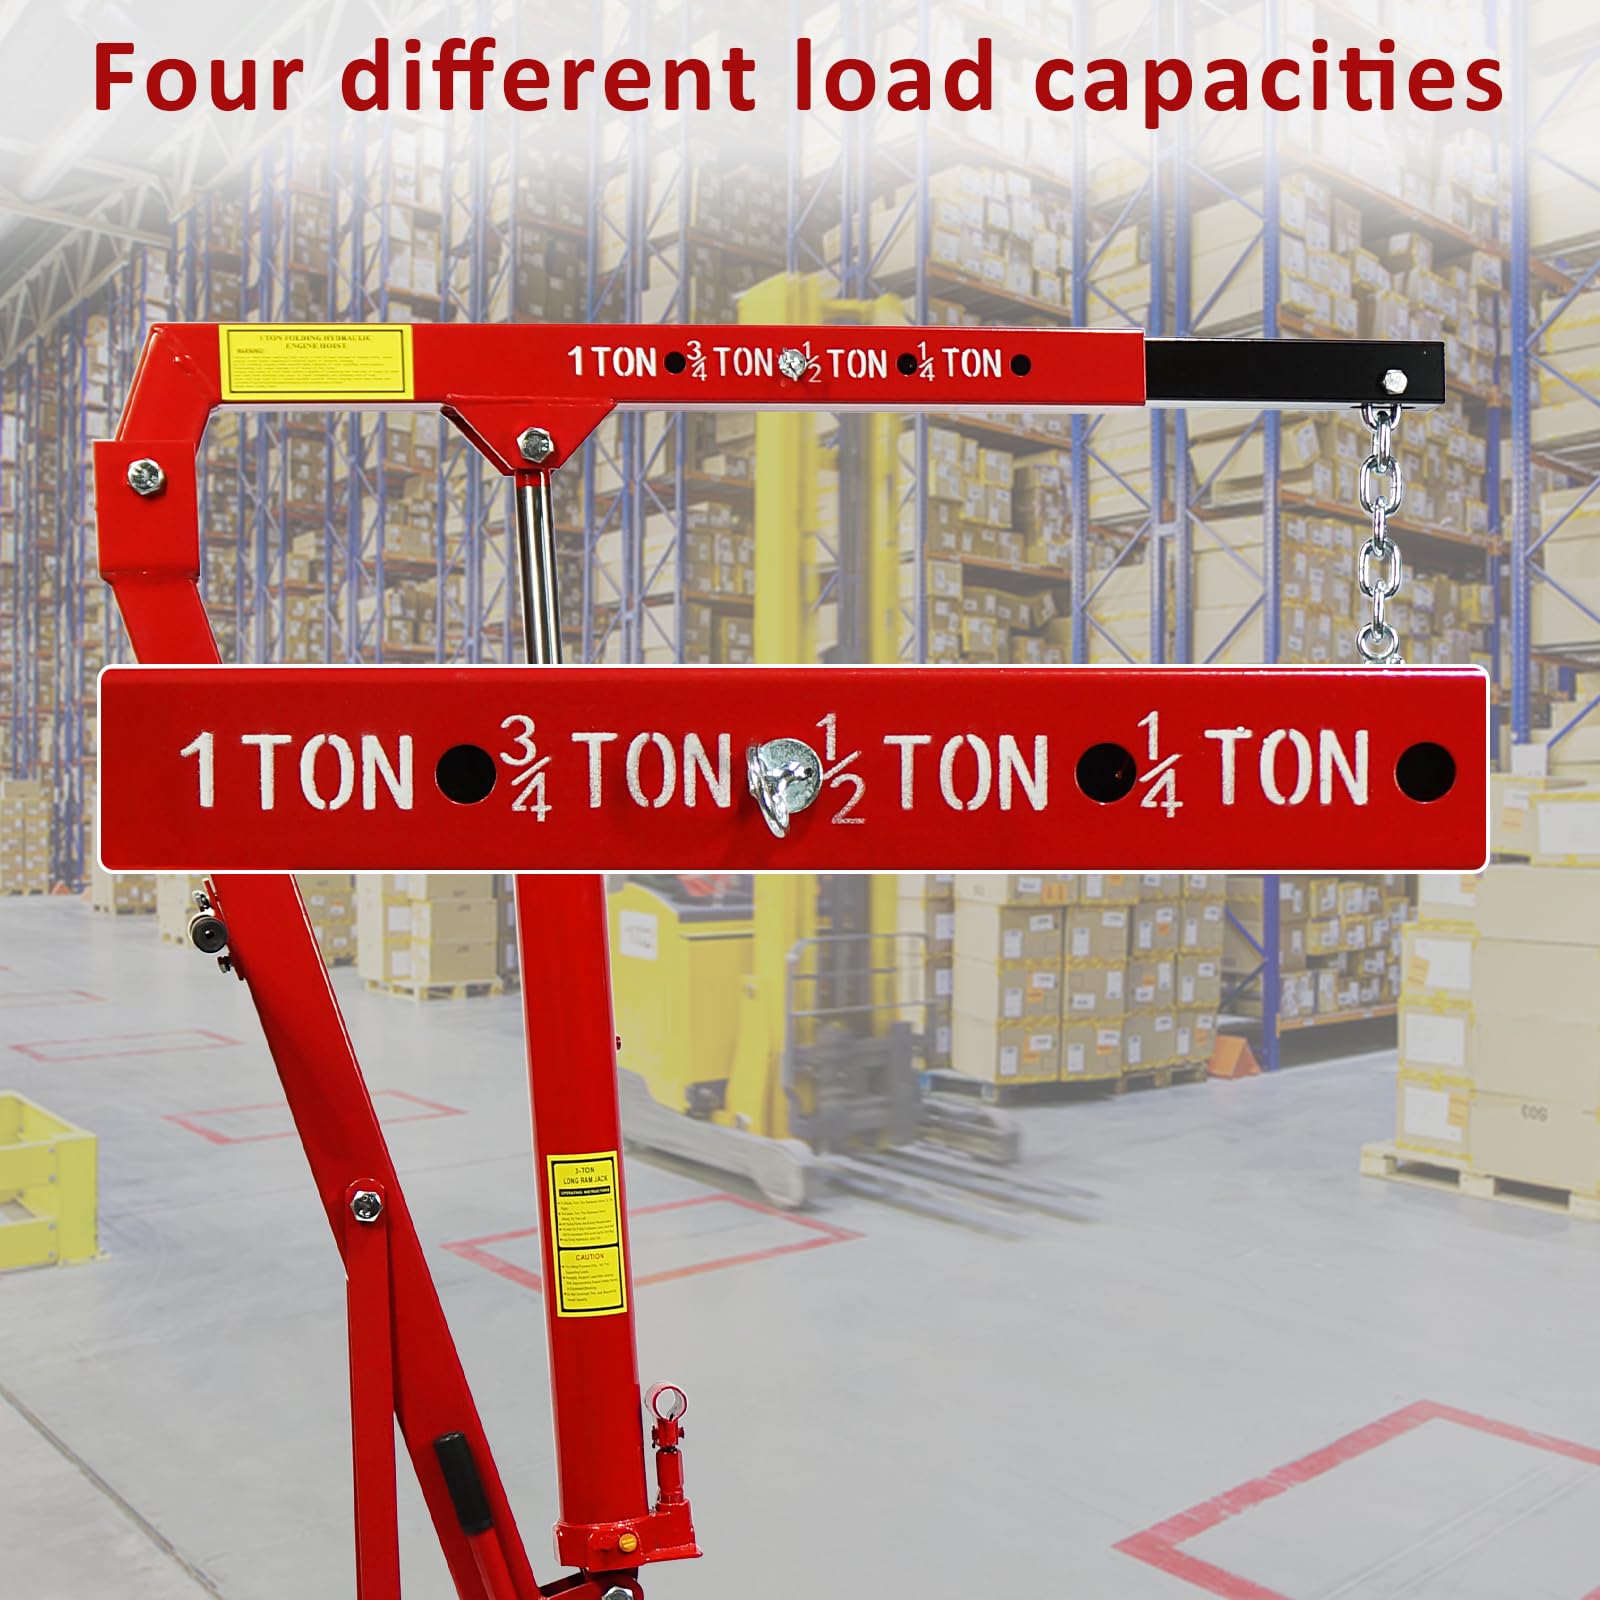 1 Ton Folding Engine Hoist, 2200 LBS Lift for Shop Use - GARVEE